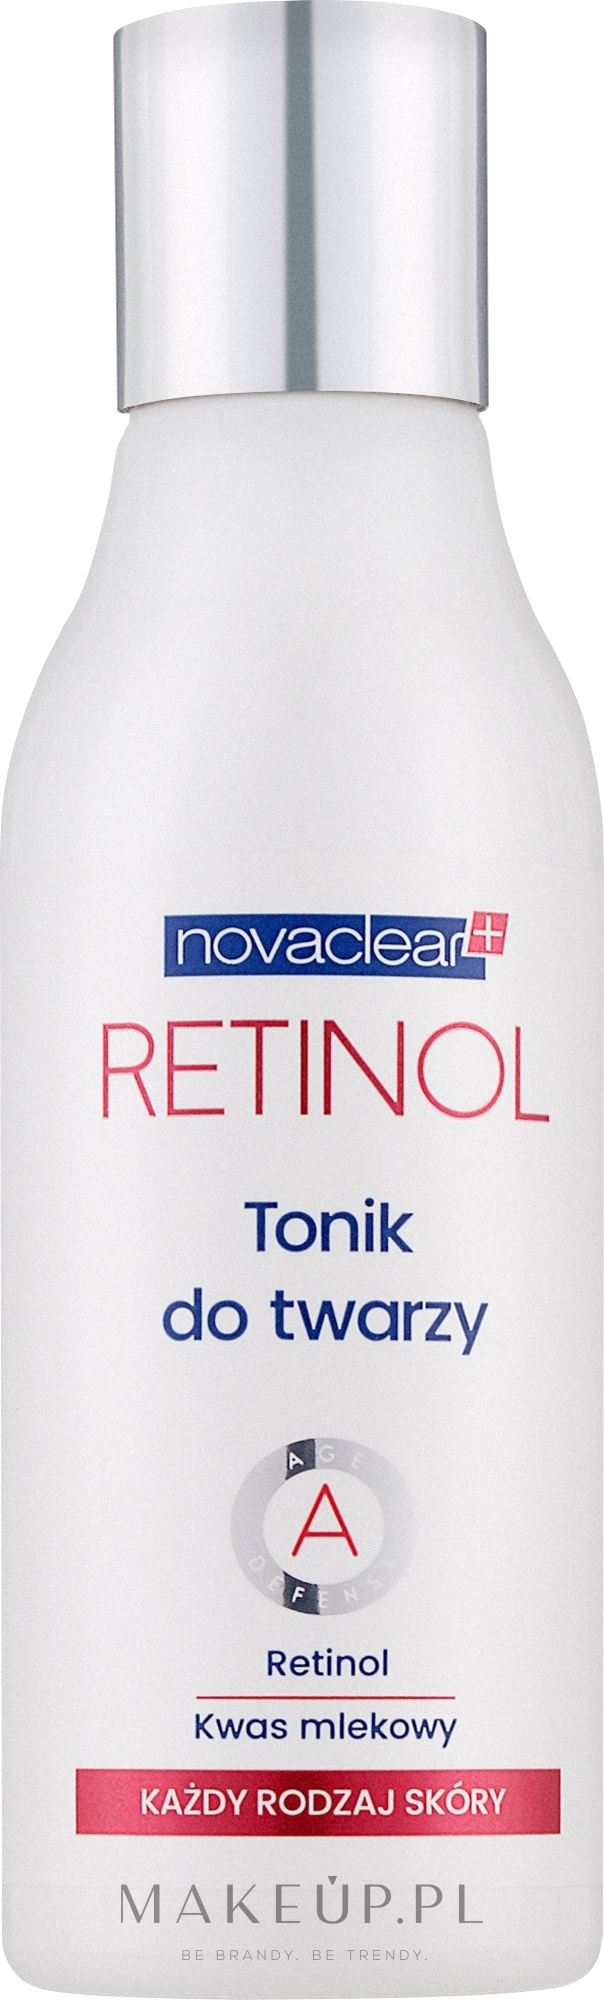 Tonik do twarzy z retinolem - Novaclear Retinol Rejuvenating Facial Toner — Zdjęcie 100 ml